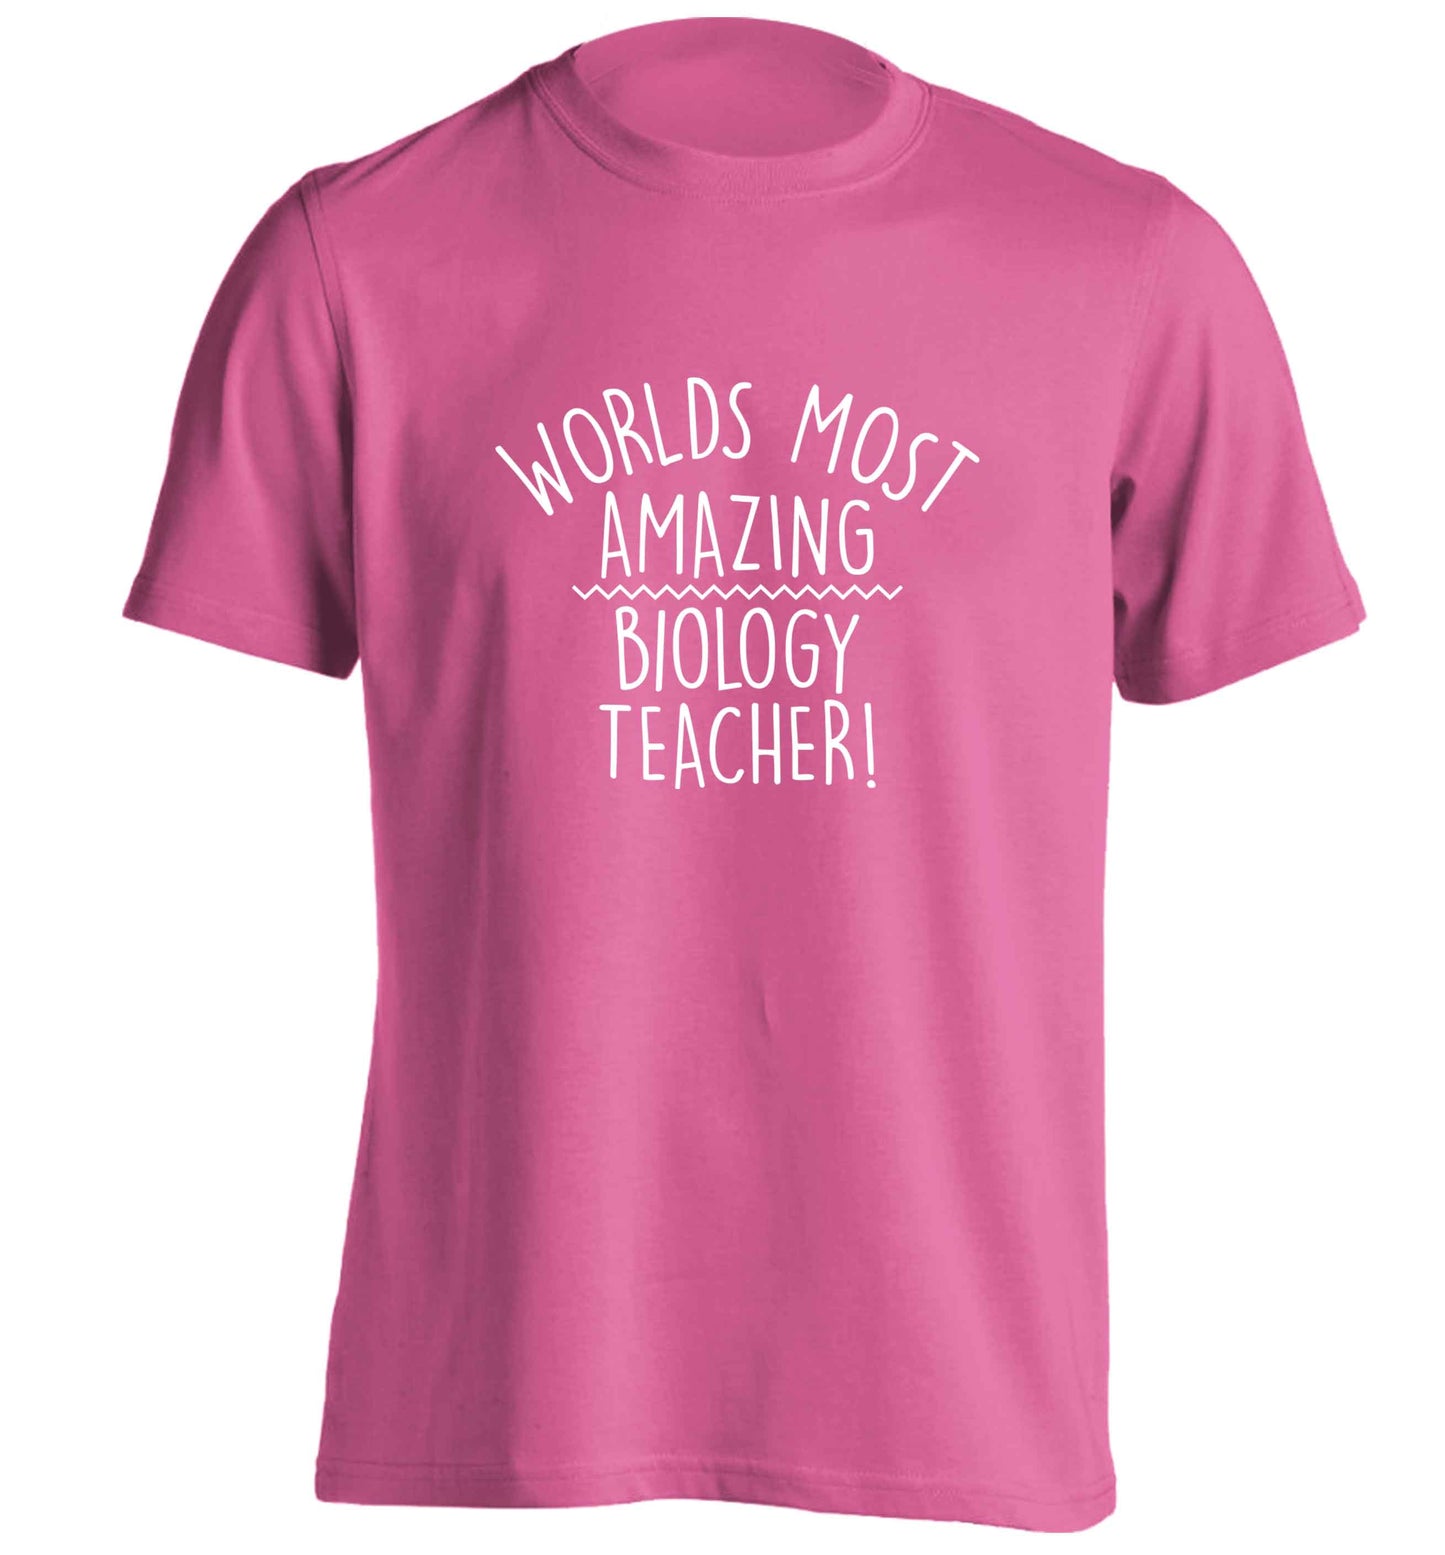 Worlds most amazing biology teacher adults unisex pink Tshirt 2XL